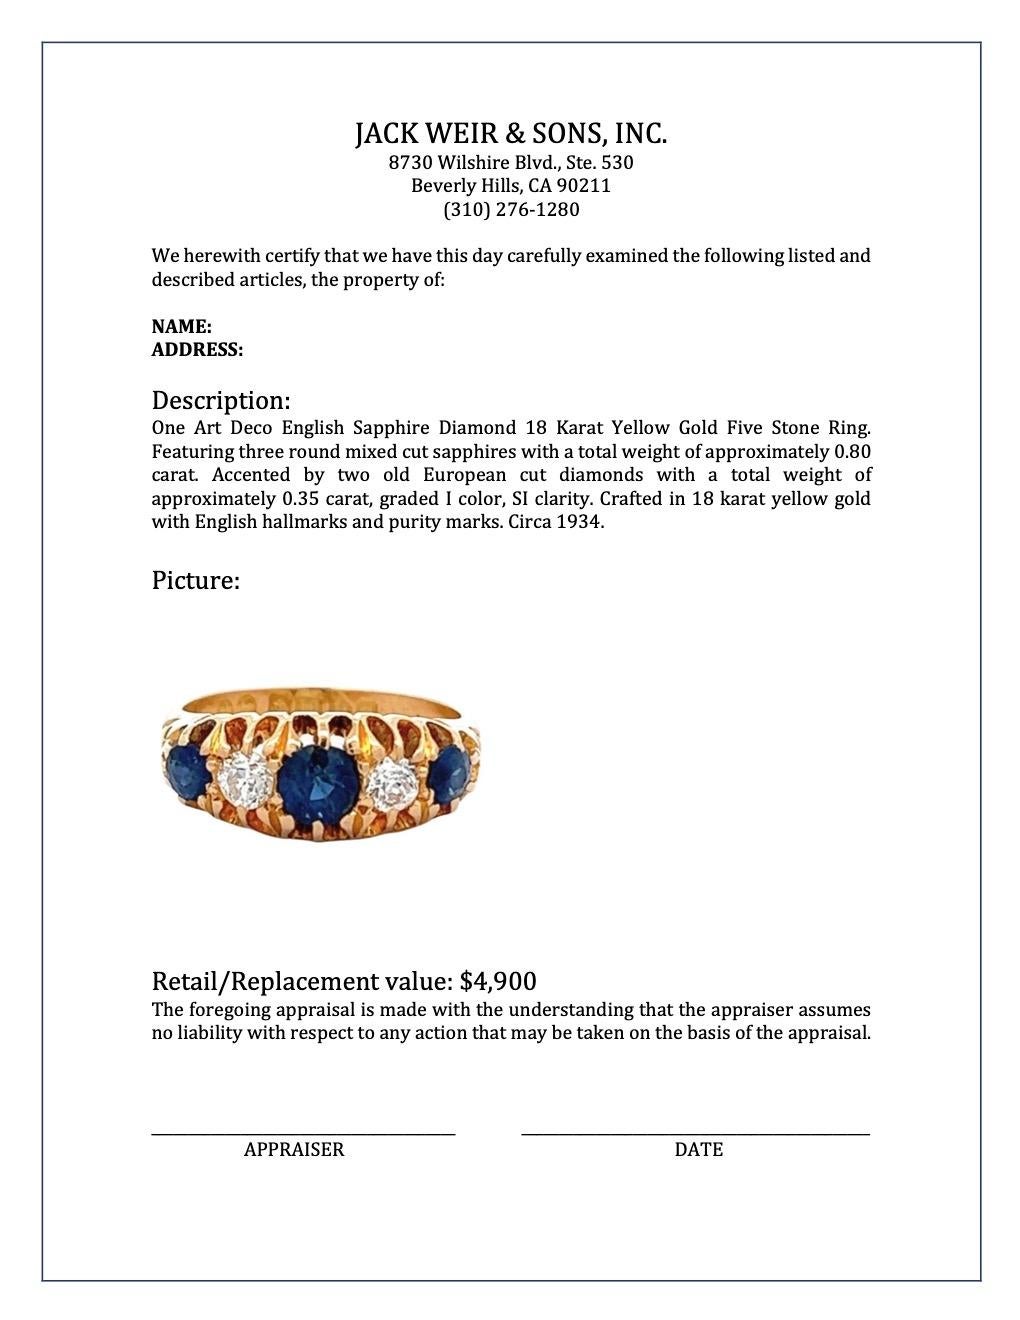 Art Deco English Sapphire Diamond 18 Karat Yellow Gold Five Stone Ring 2